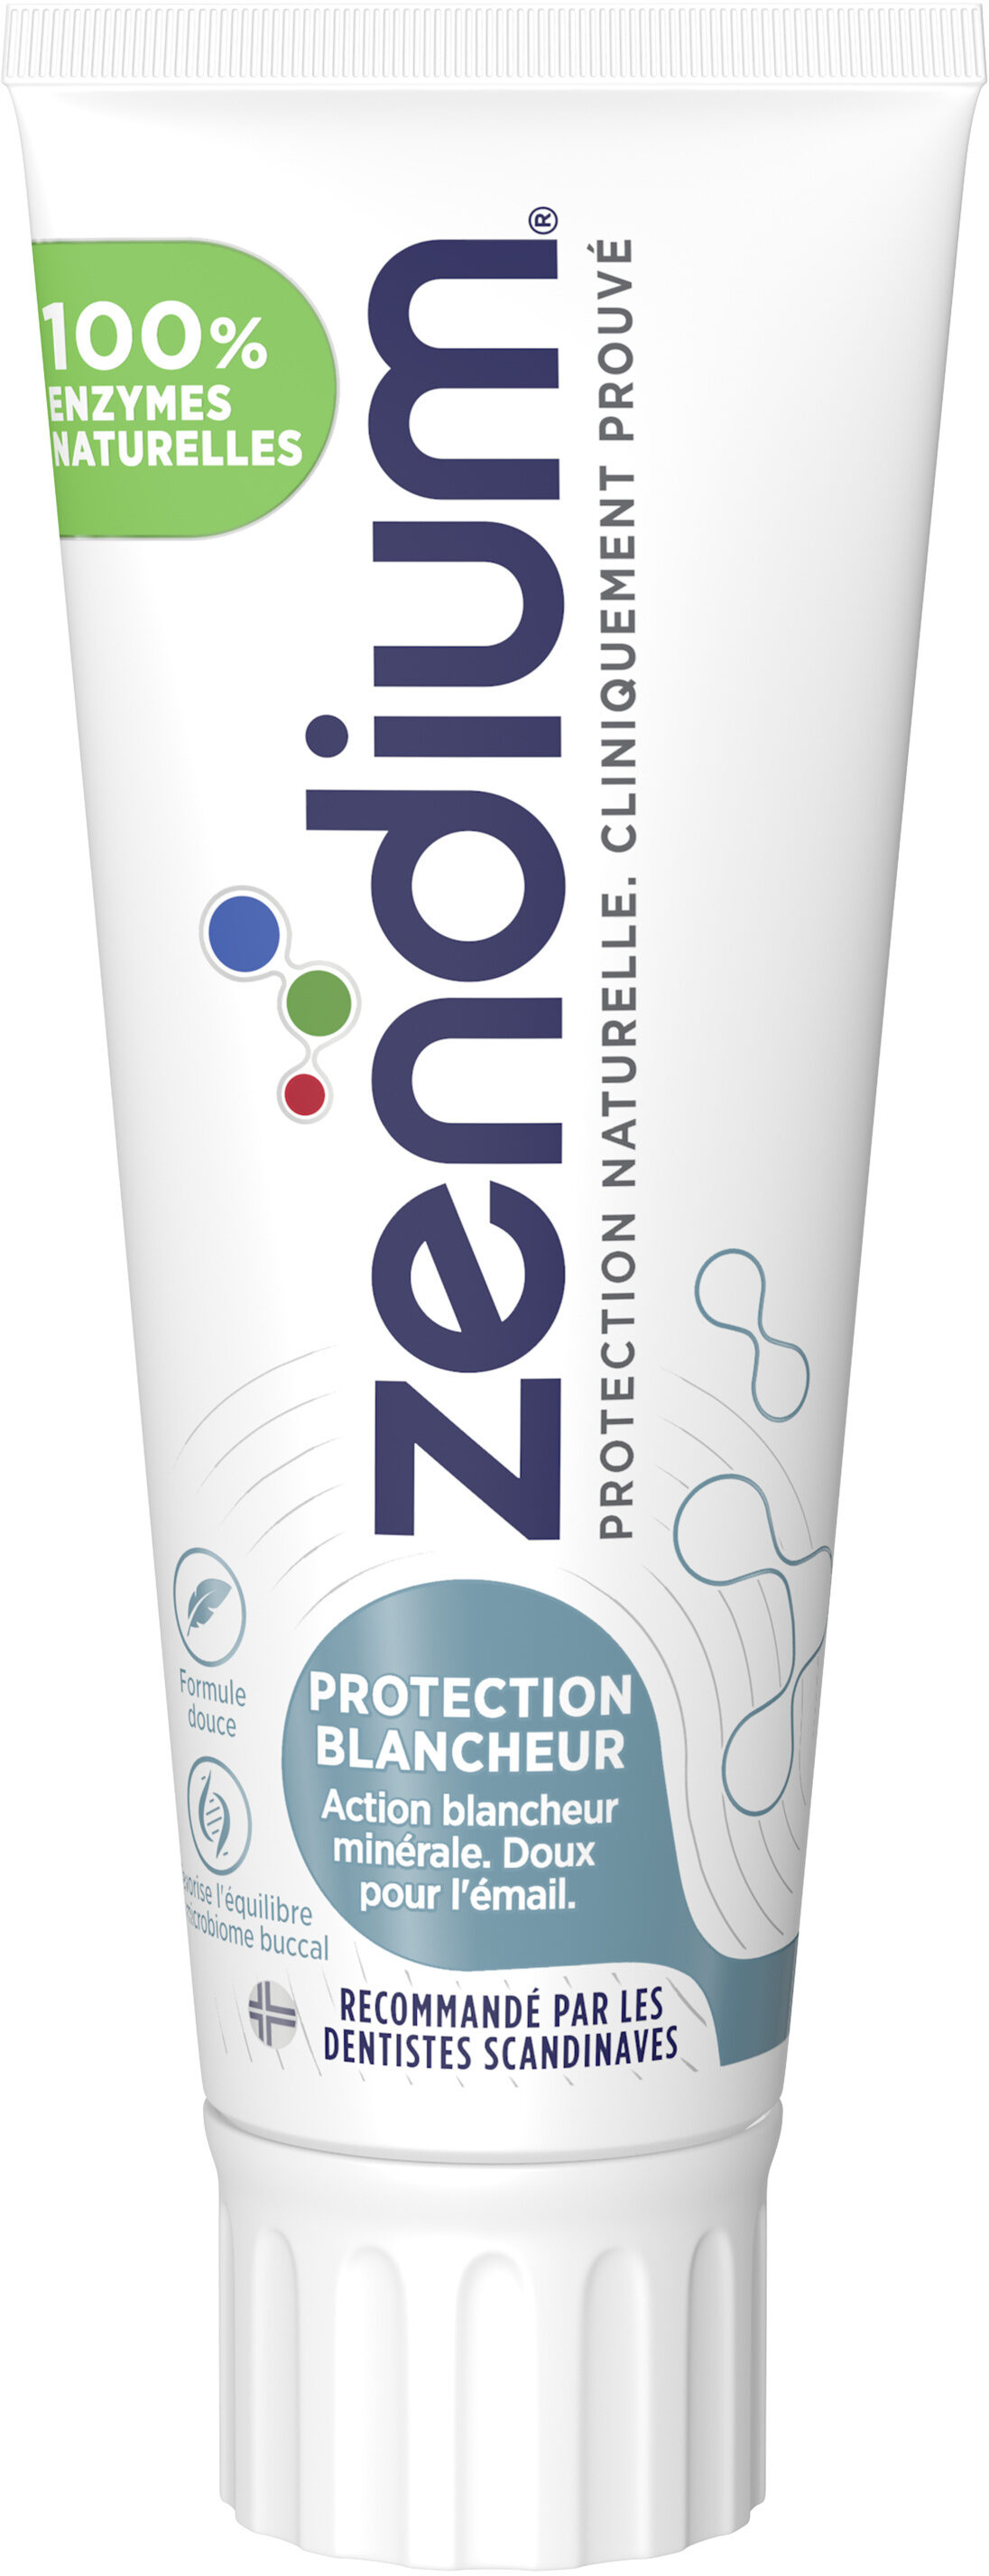 ZENDIUM Dentifrice Protection Blancheur 75ml - Produit - fr